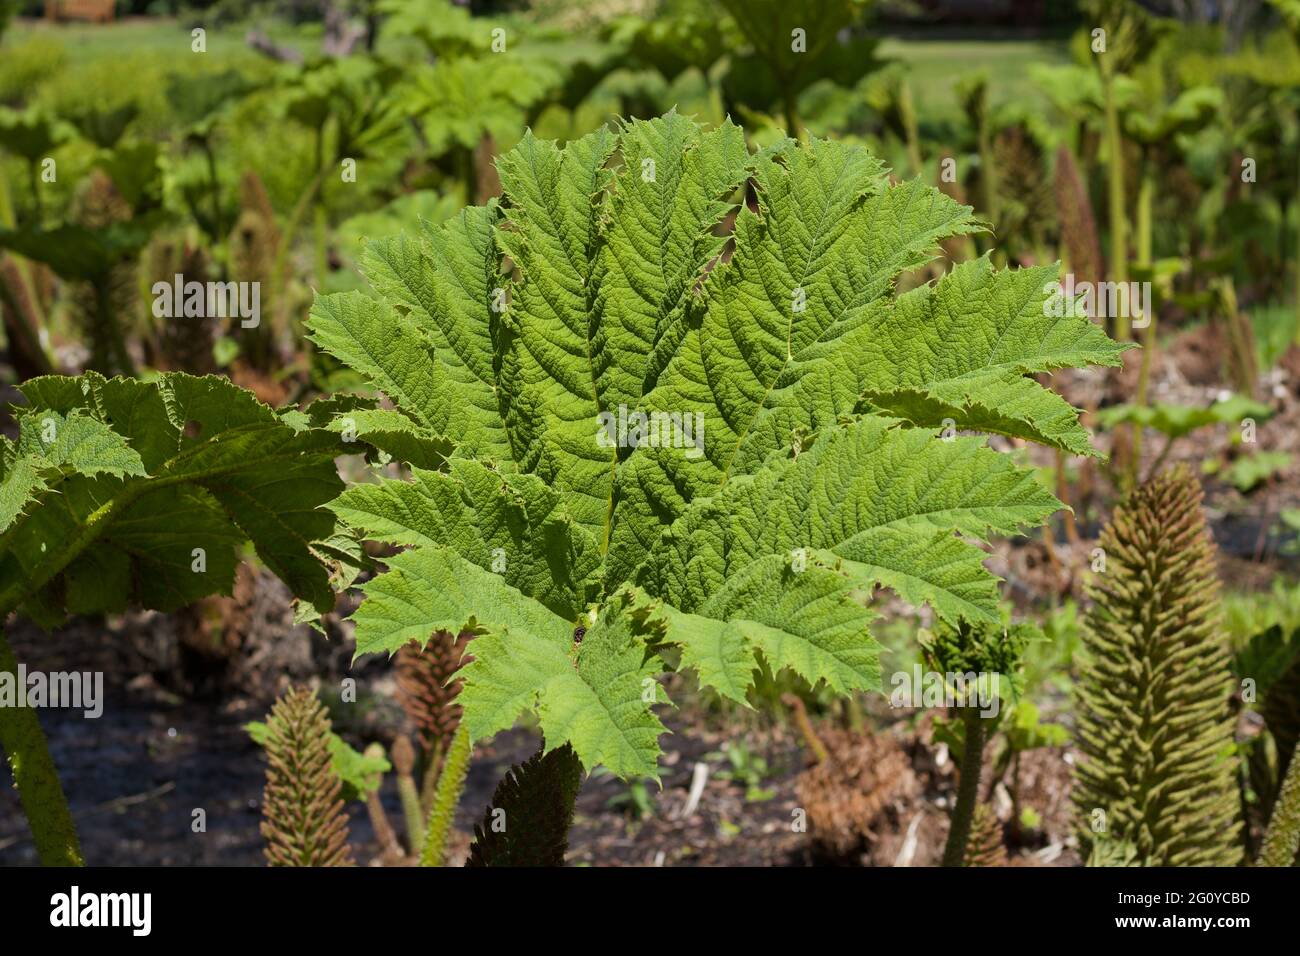 Large lush green leaf of gunnera manicata in garden setting Stock Photo